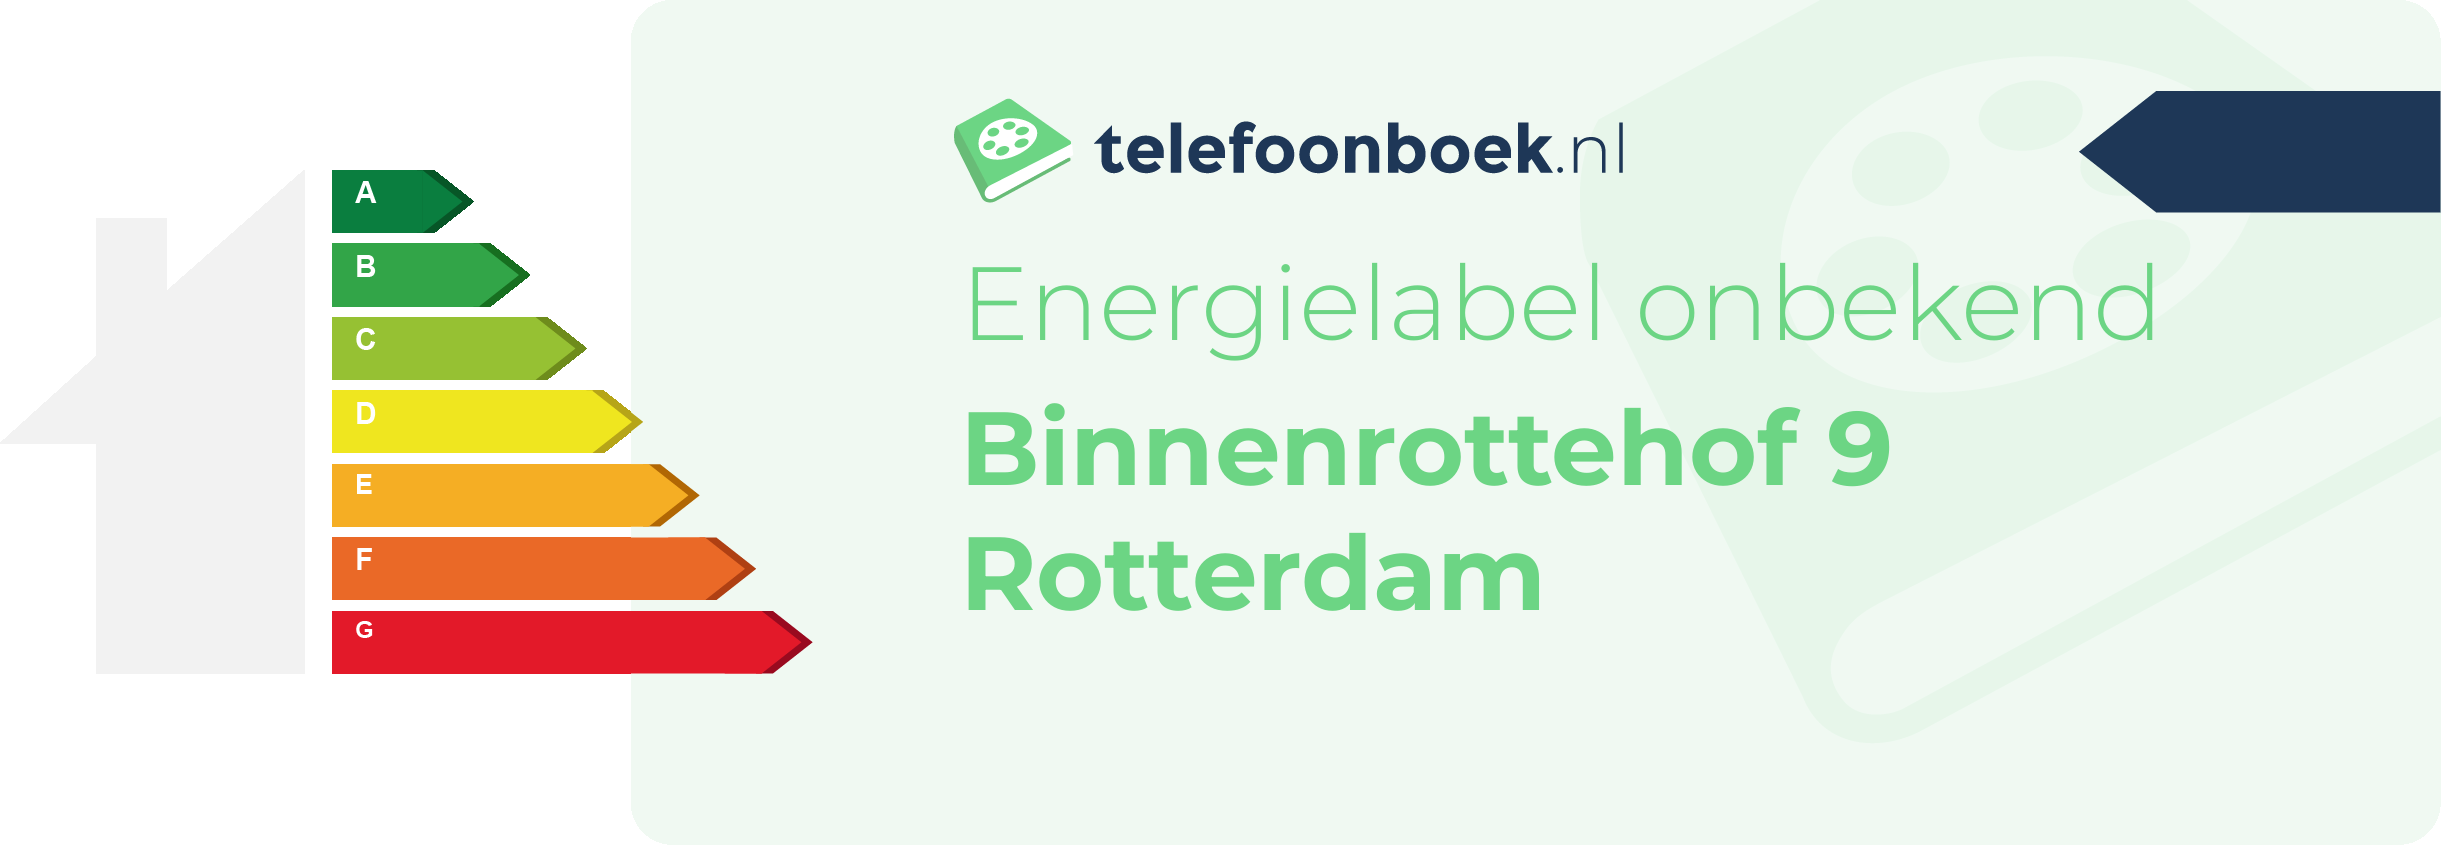 Energielabel Binnenrottehof 9 Rotterdam